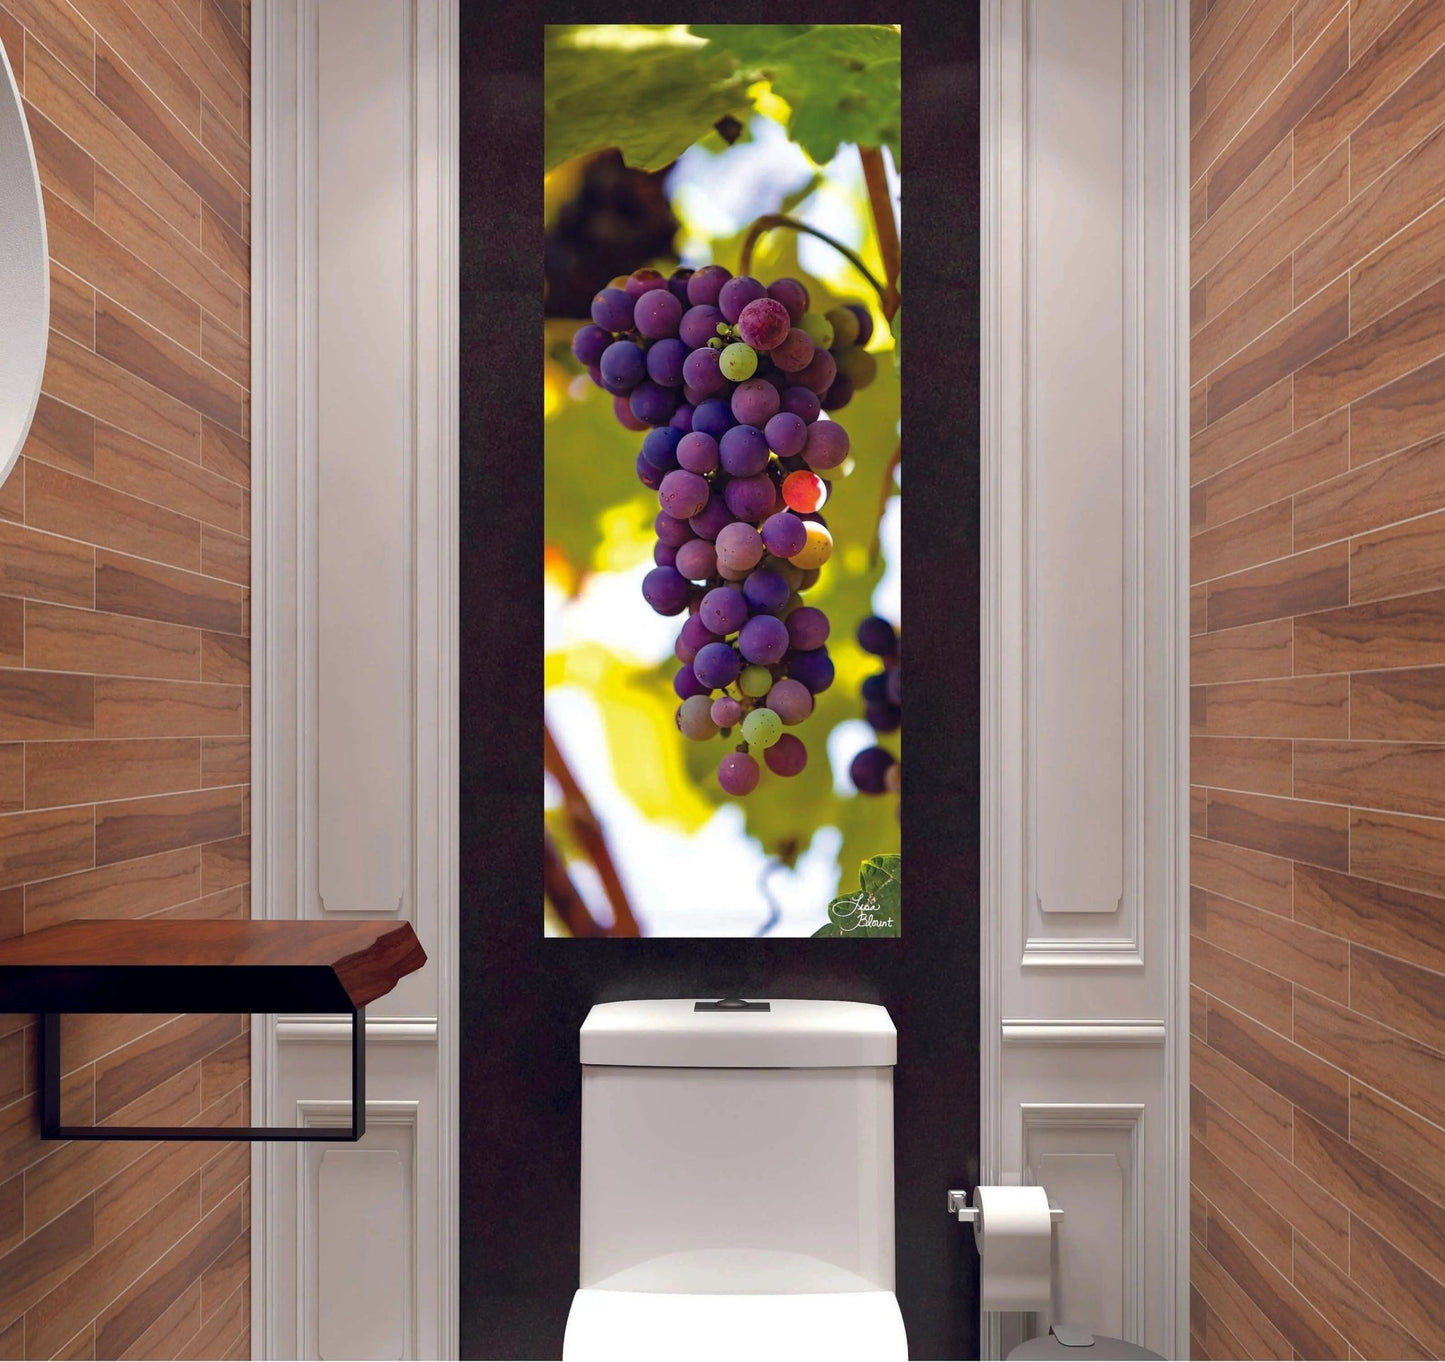 Tall narrow art of napa grapes featured in hallway bathroom